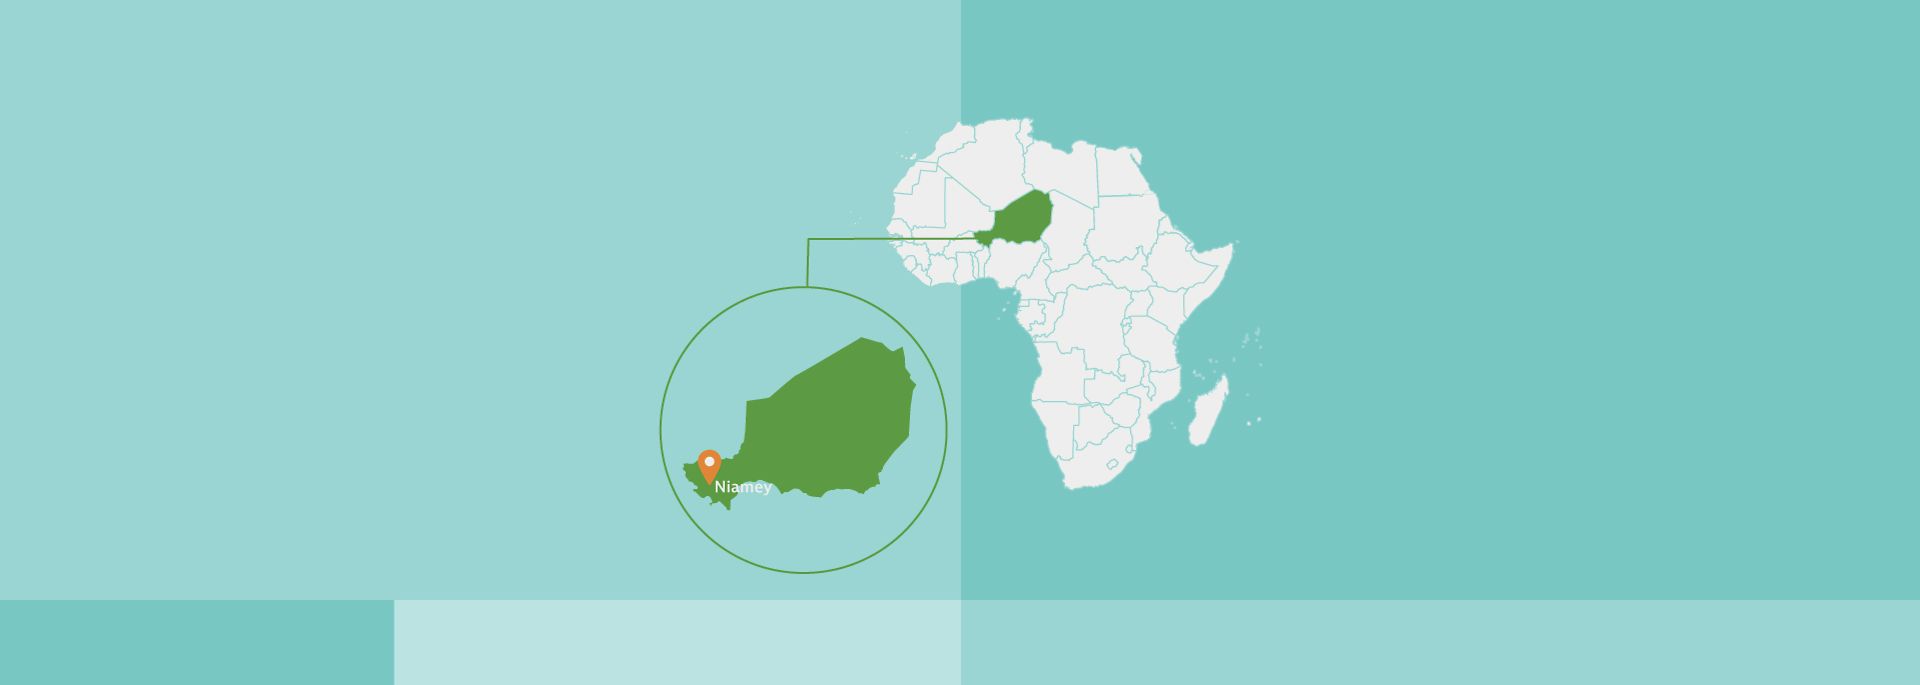 Afrikakarte, Niger